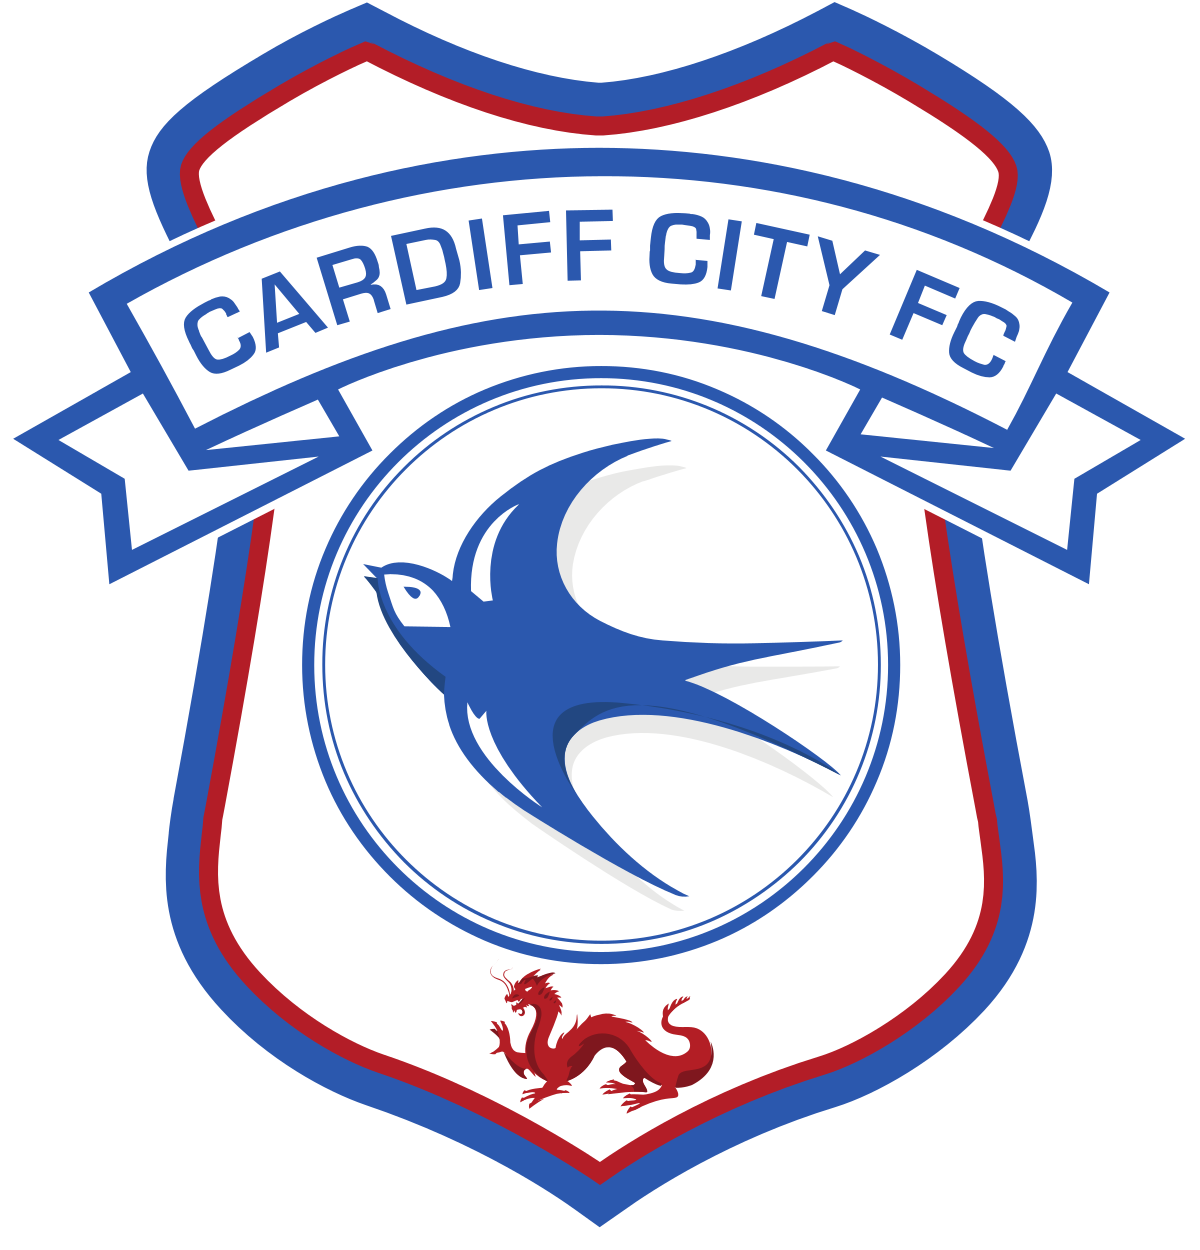 Cardiff city v Colchester United 28/10/95 